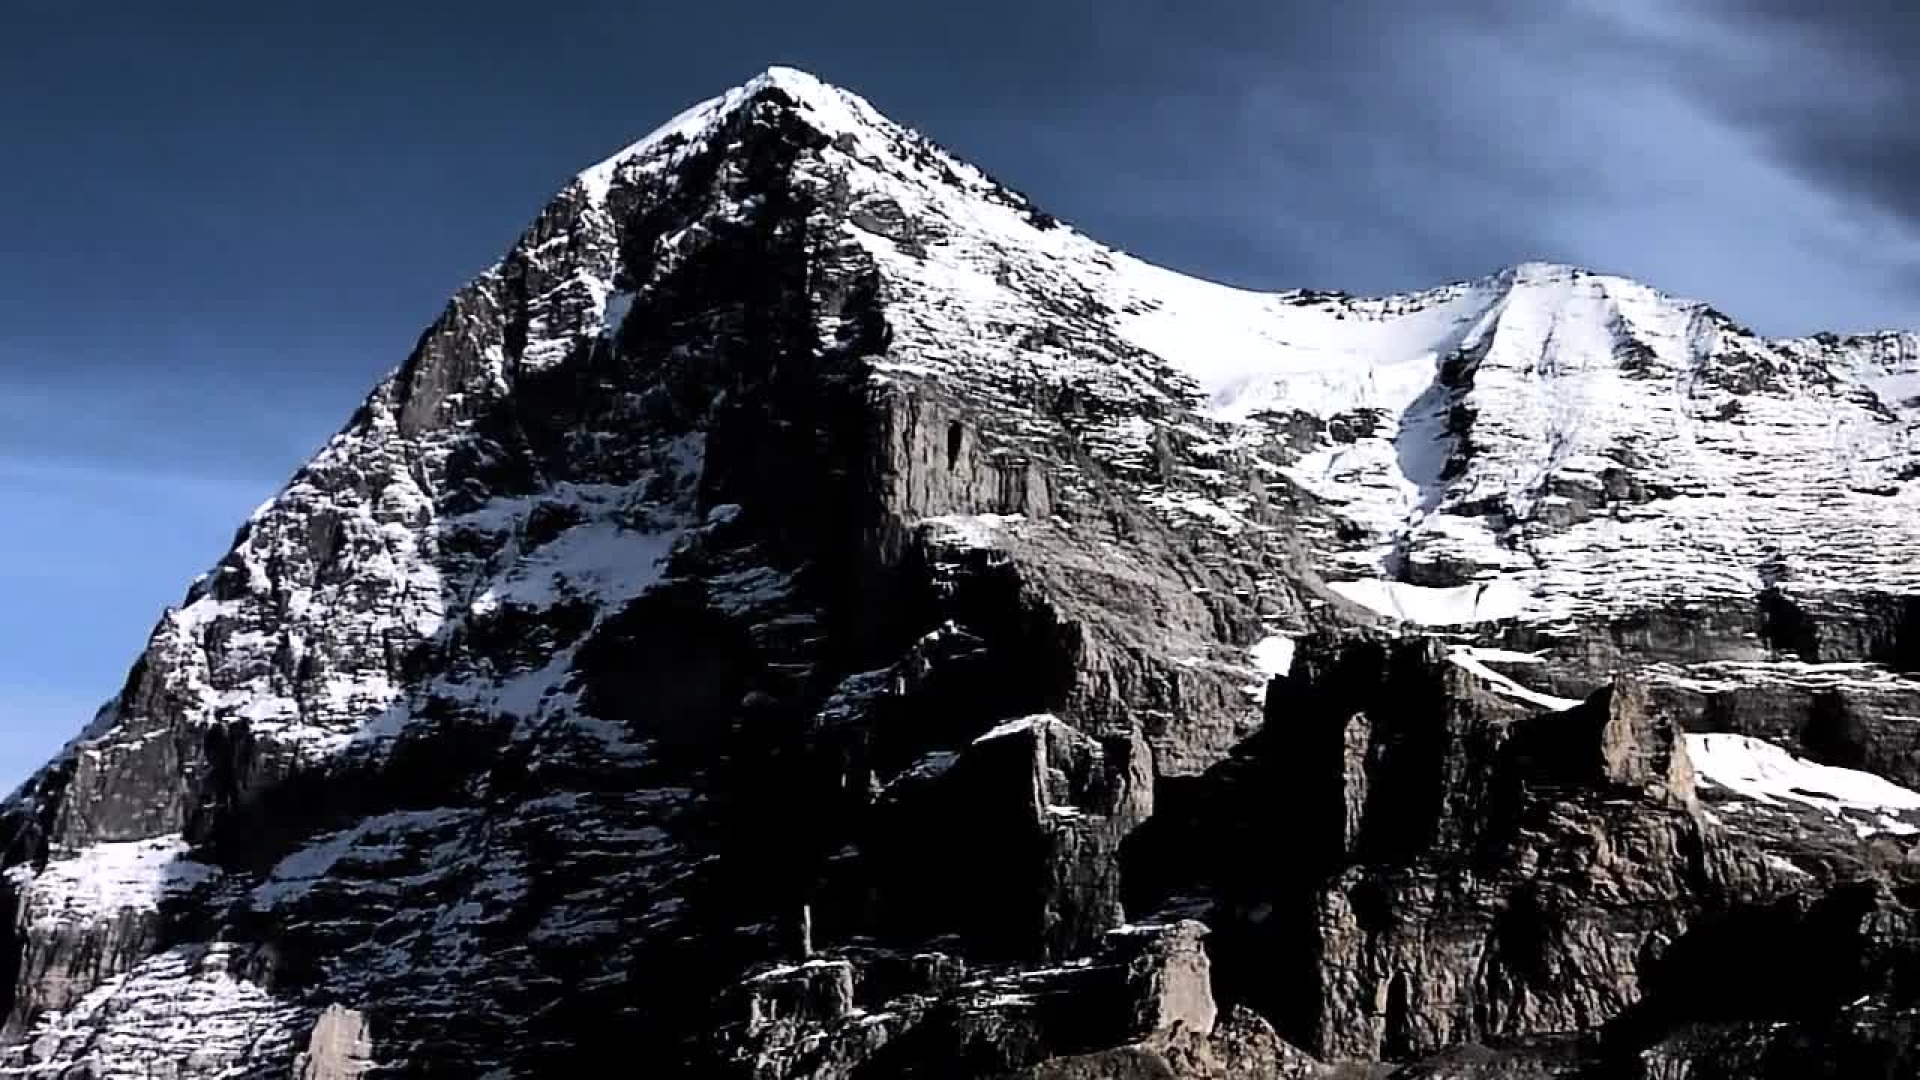 Eiger North Face Wallpaper